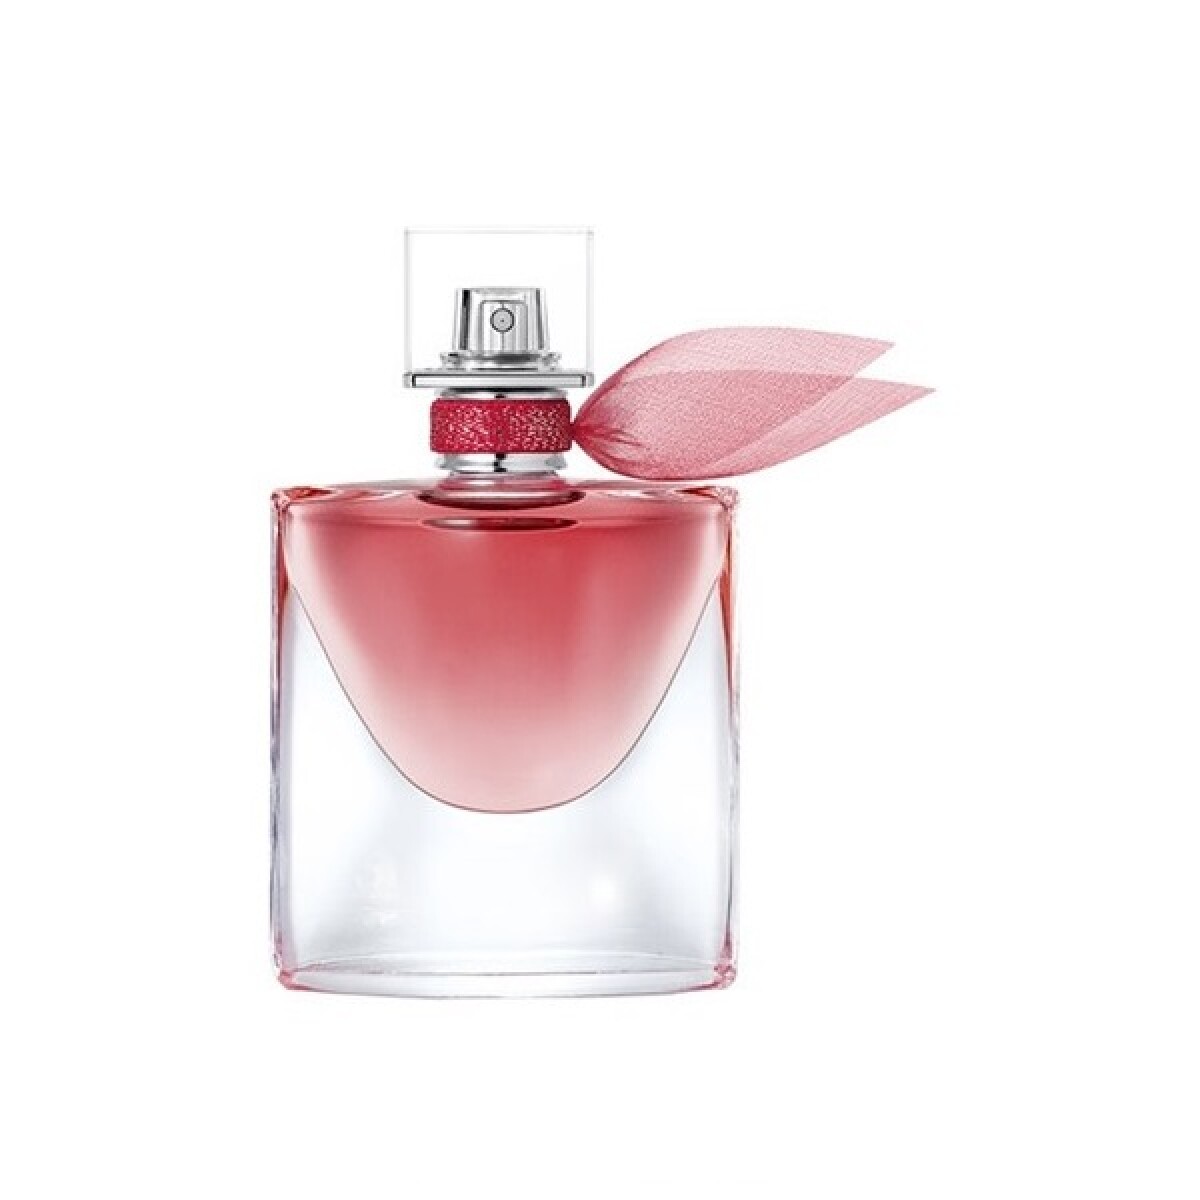 Perfume La Vie Est Belle New Edp Intense 30 Ml. 